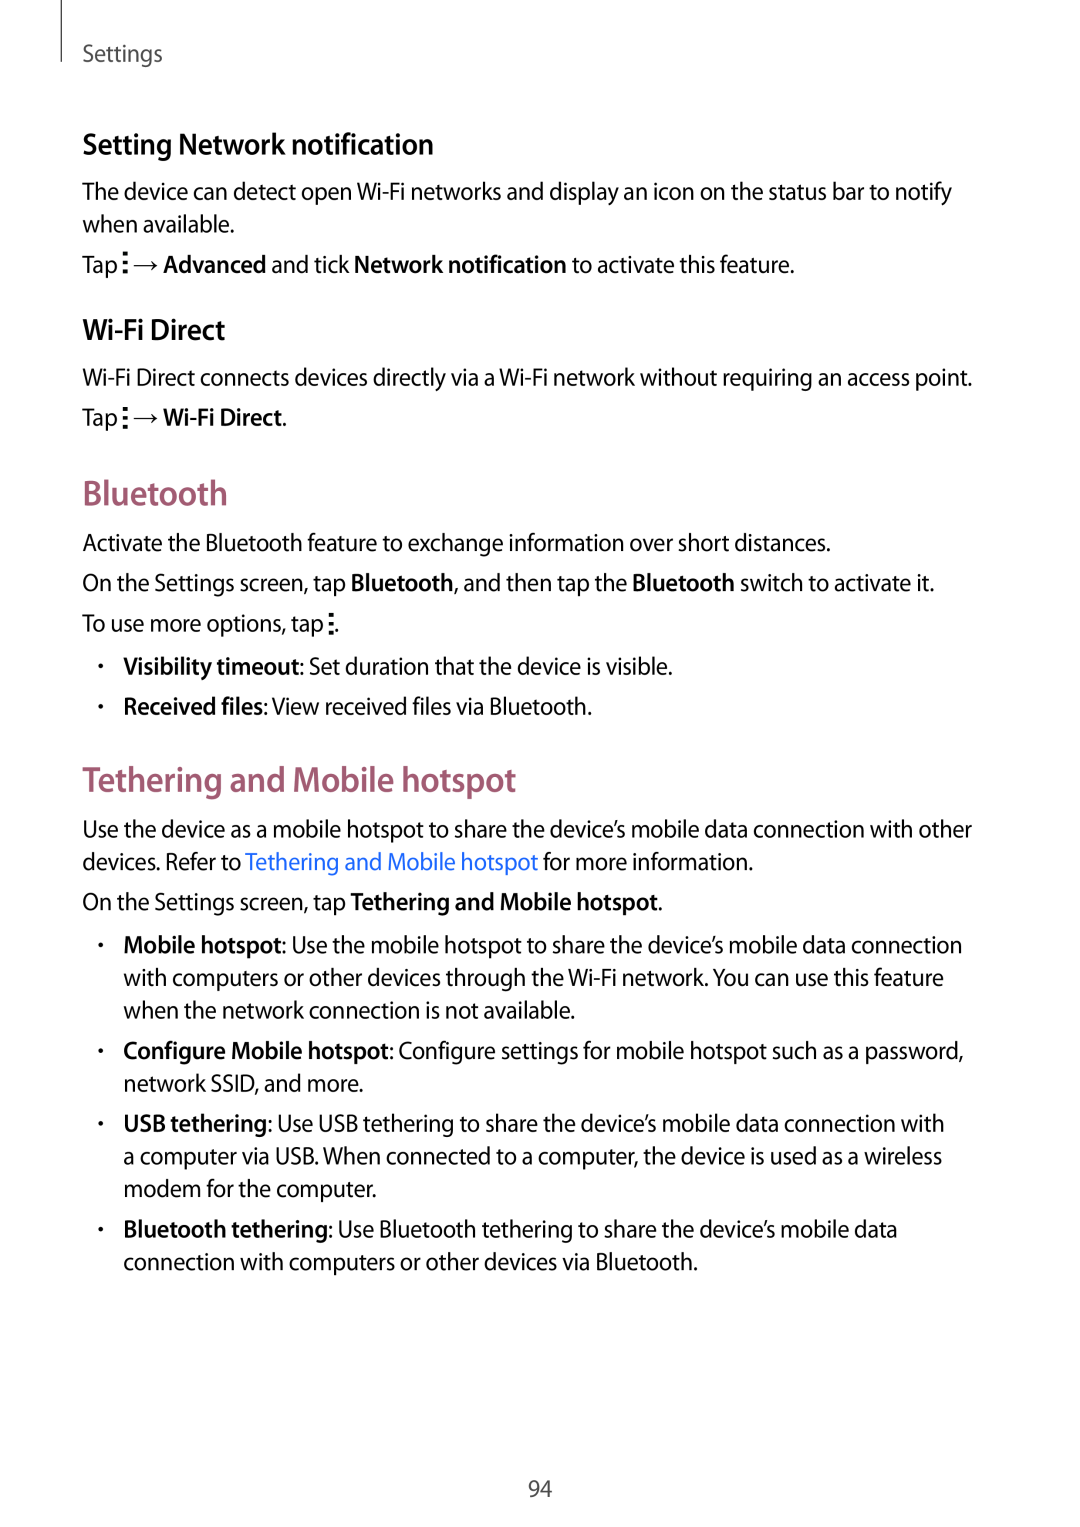 Samsung SM-G357FZWZDBT manual Bluetooth, Tethering and Mobile hotspot, Setting Network notification, Wi-Fi Direct, Settings 